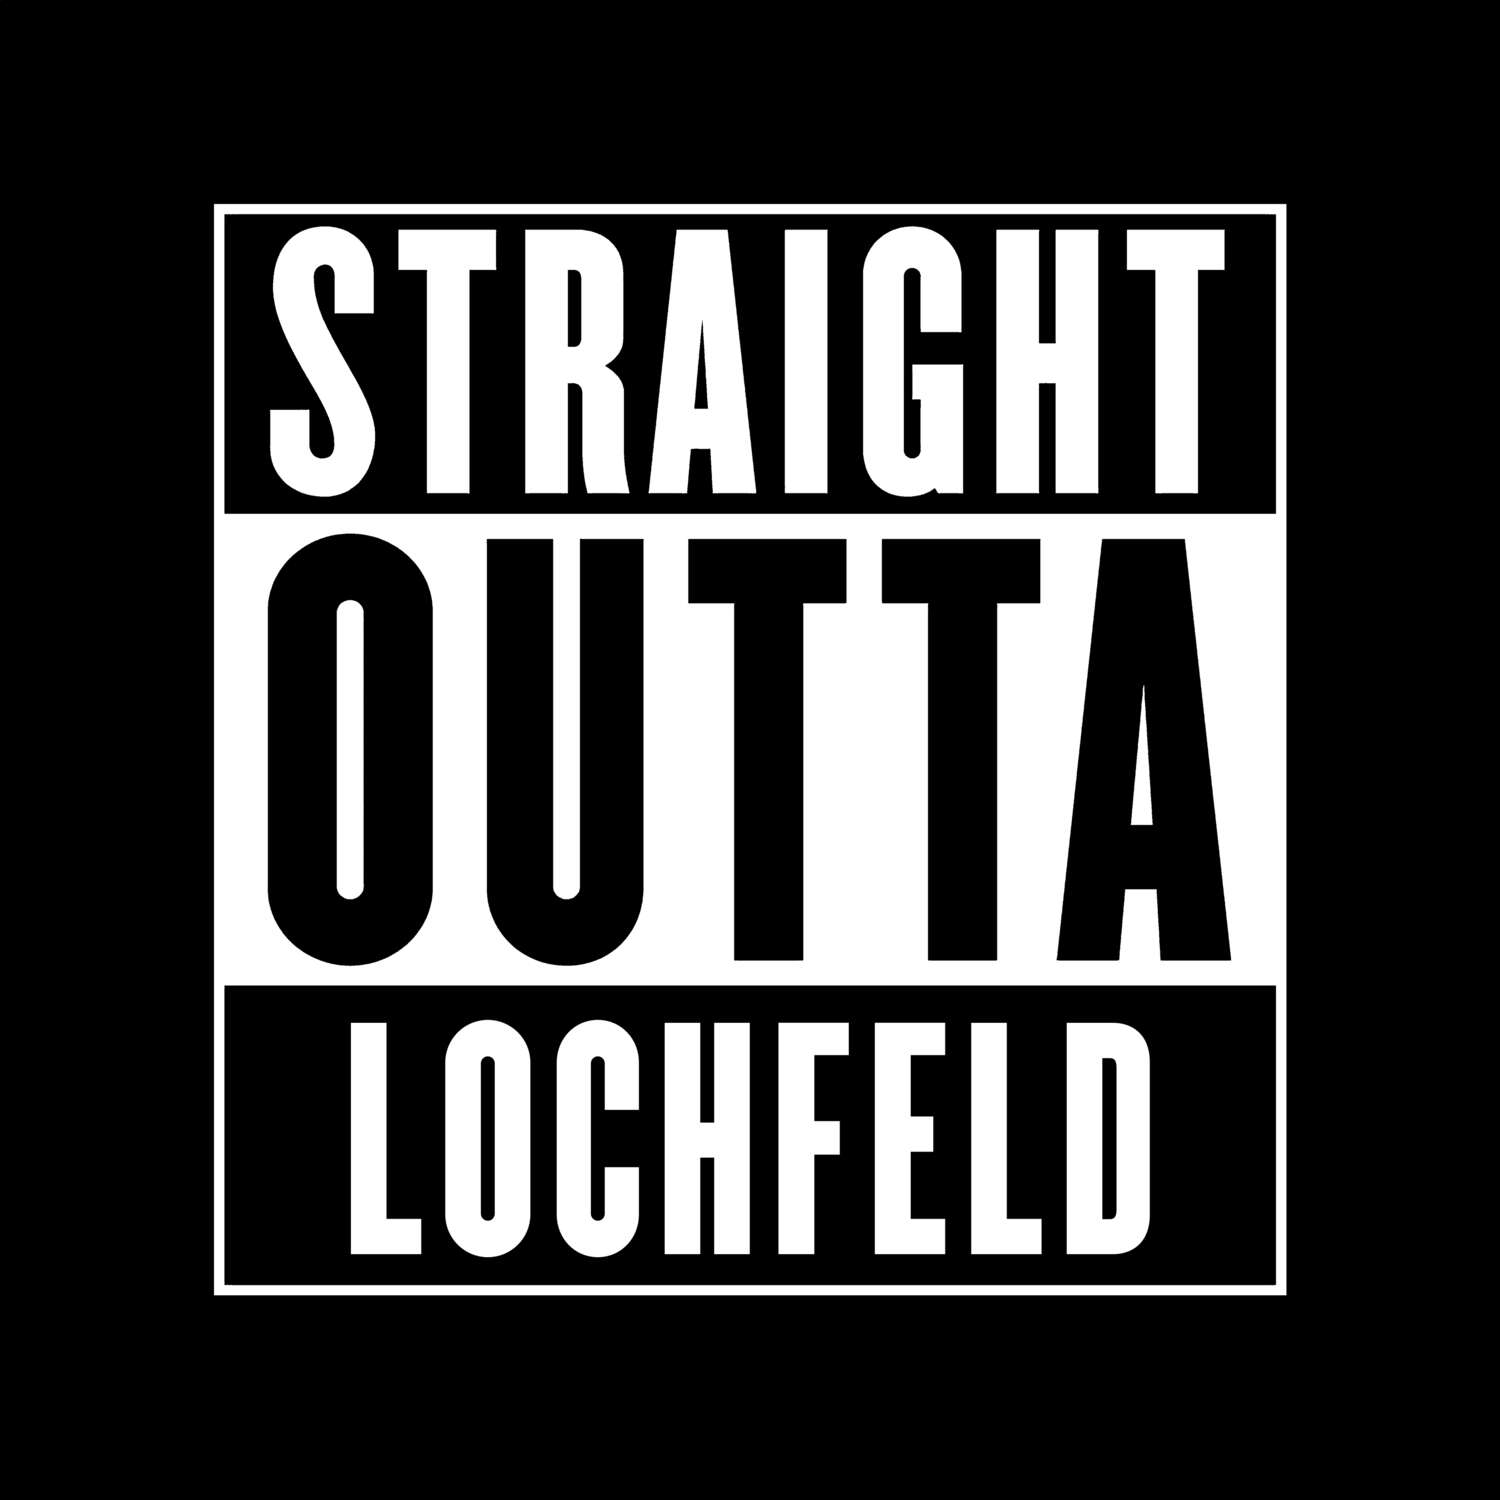 Lochfeld T-Shirt »Straight Outta«